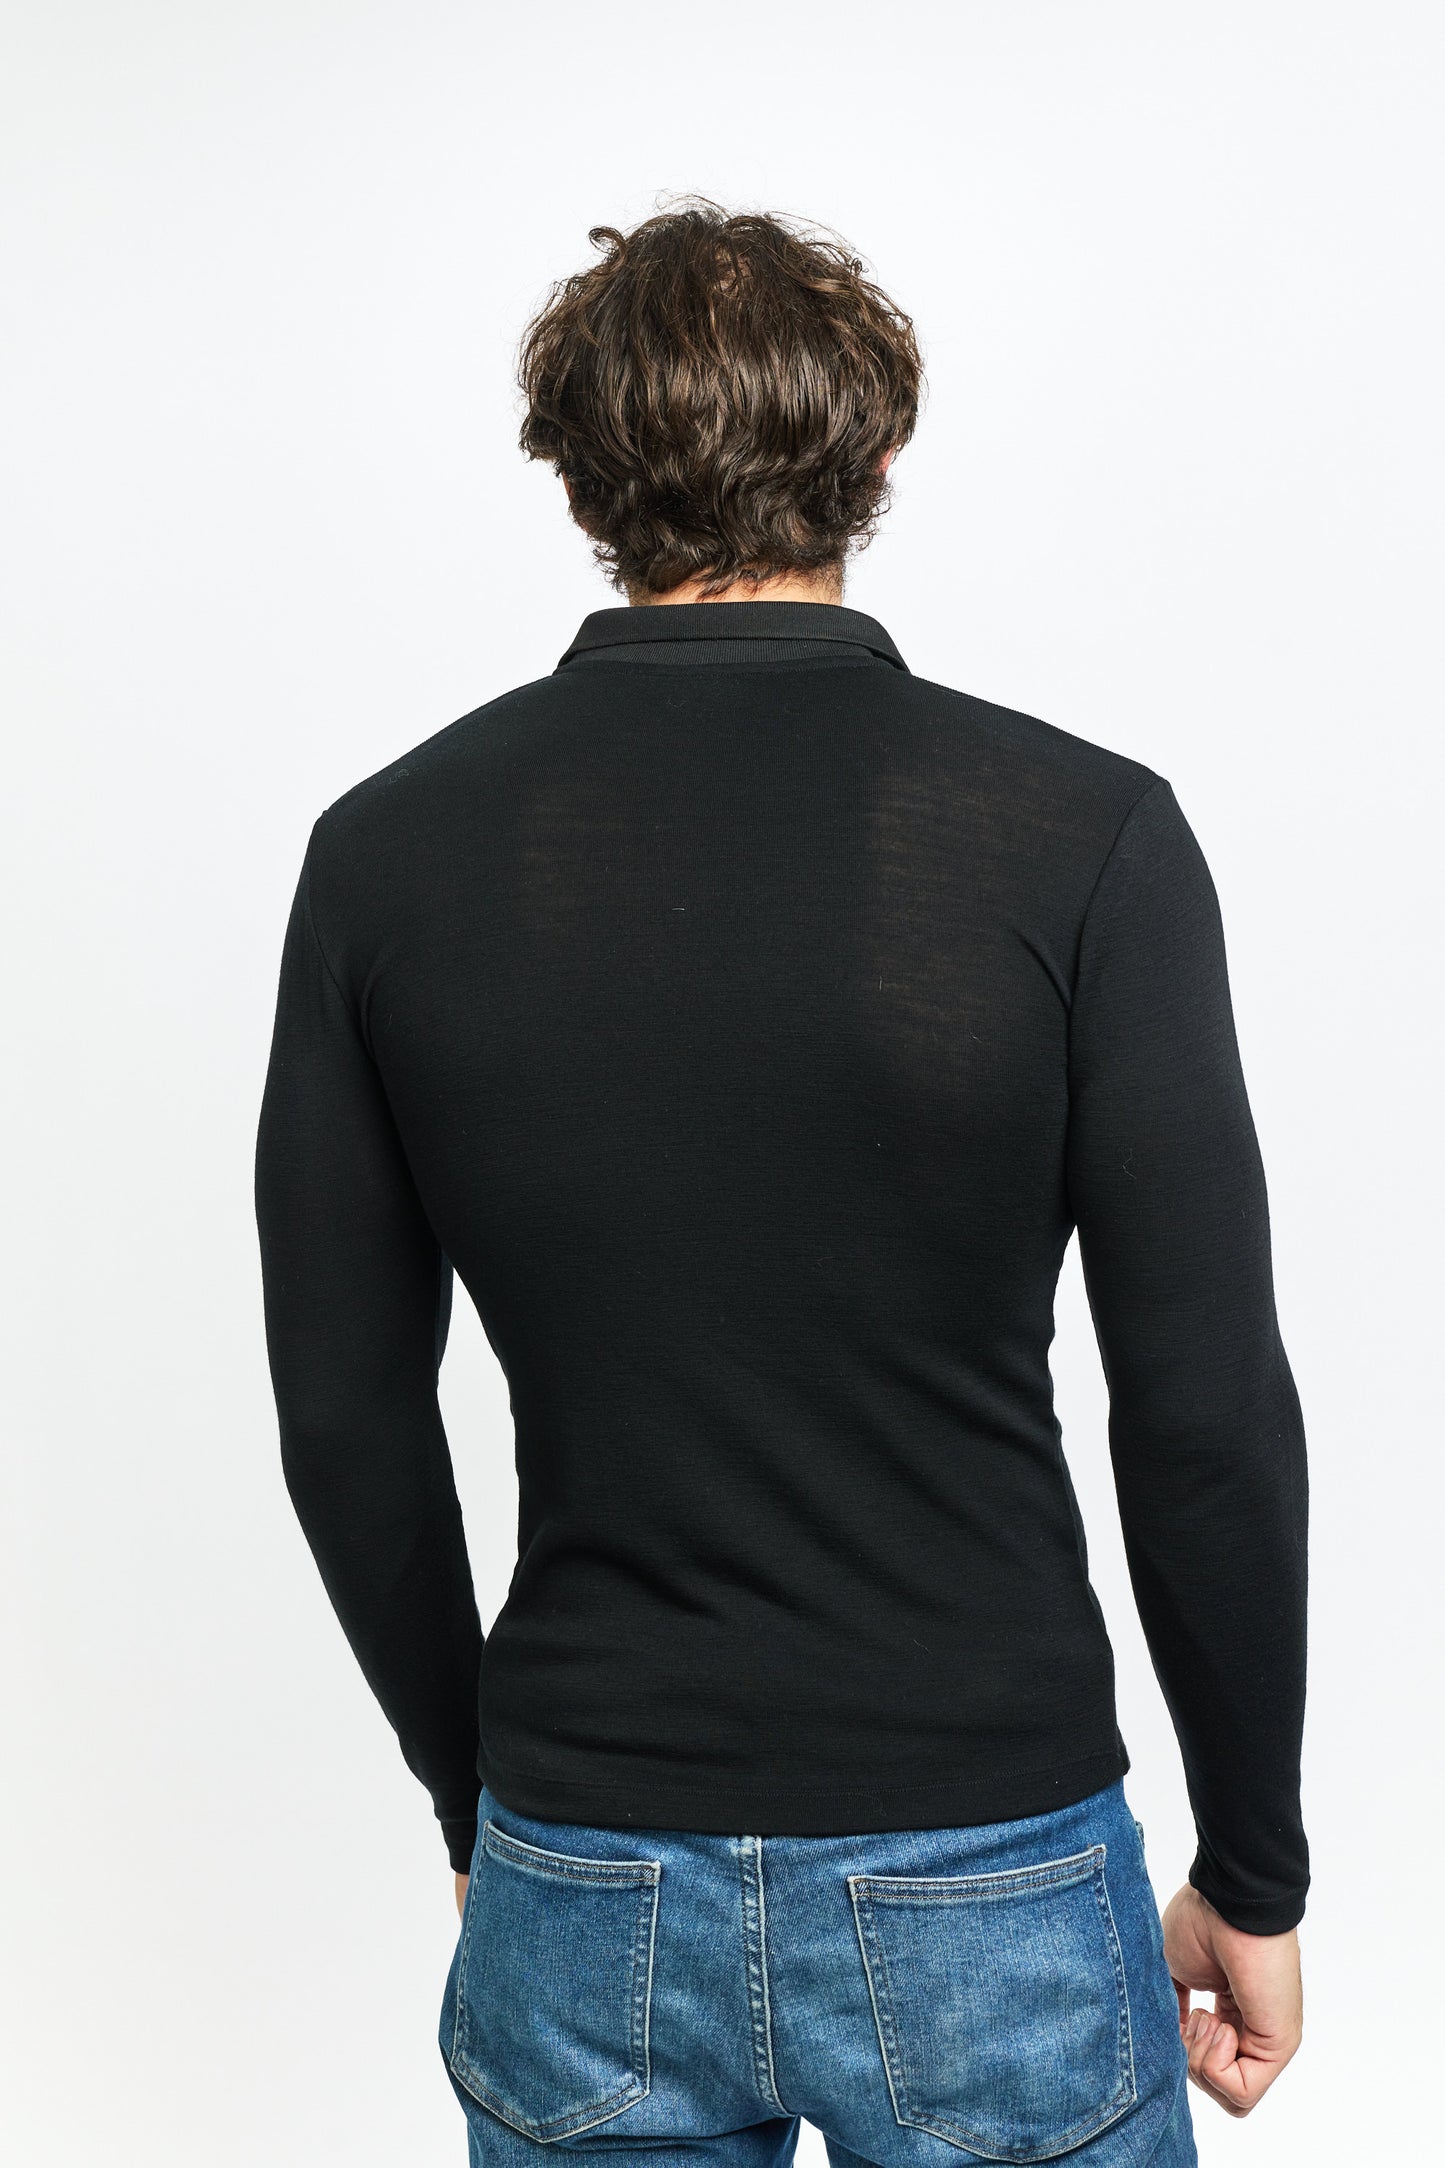 NEW Men's Pure Merino Wool POLO Long Sleeve - Black